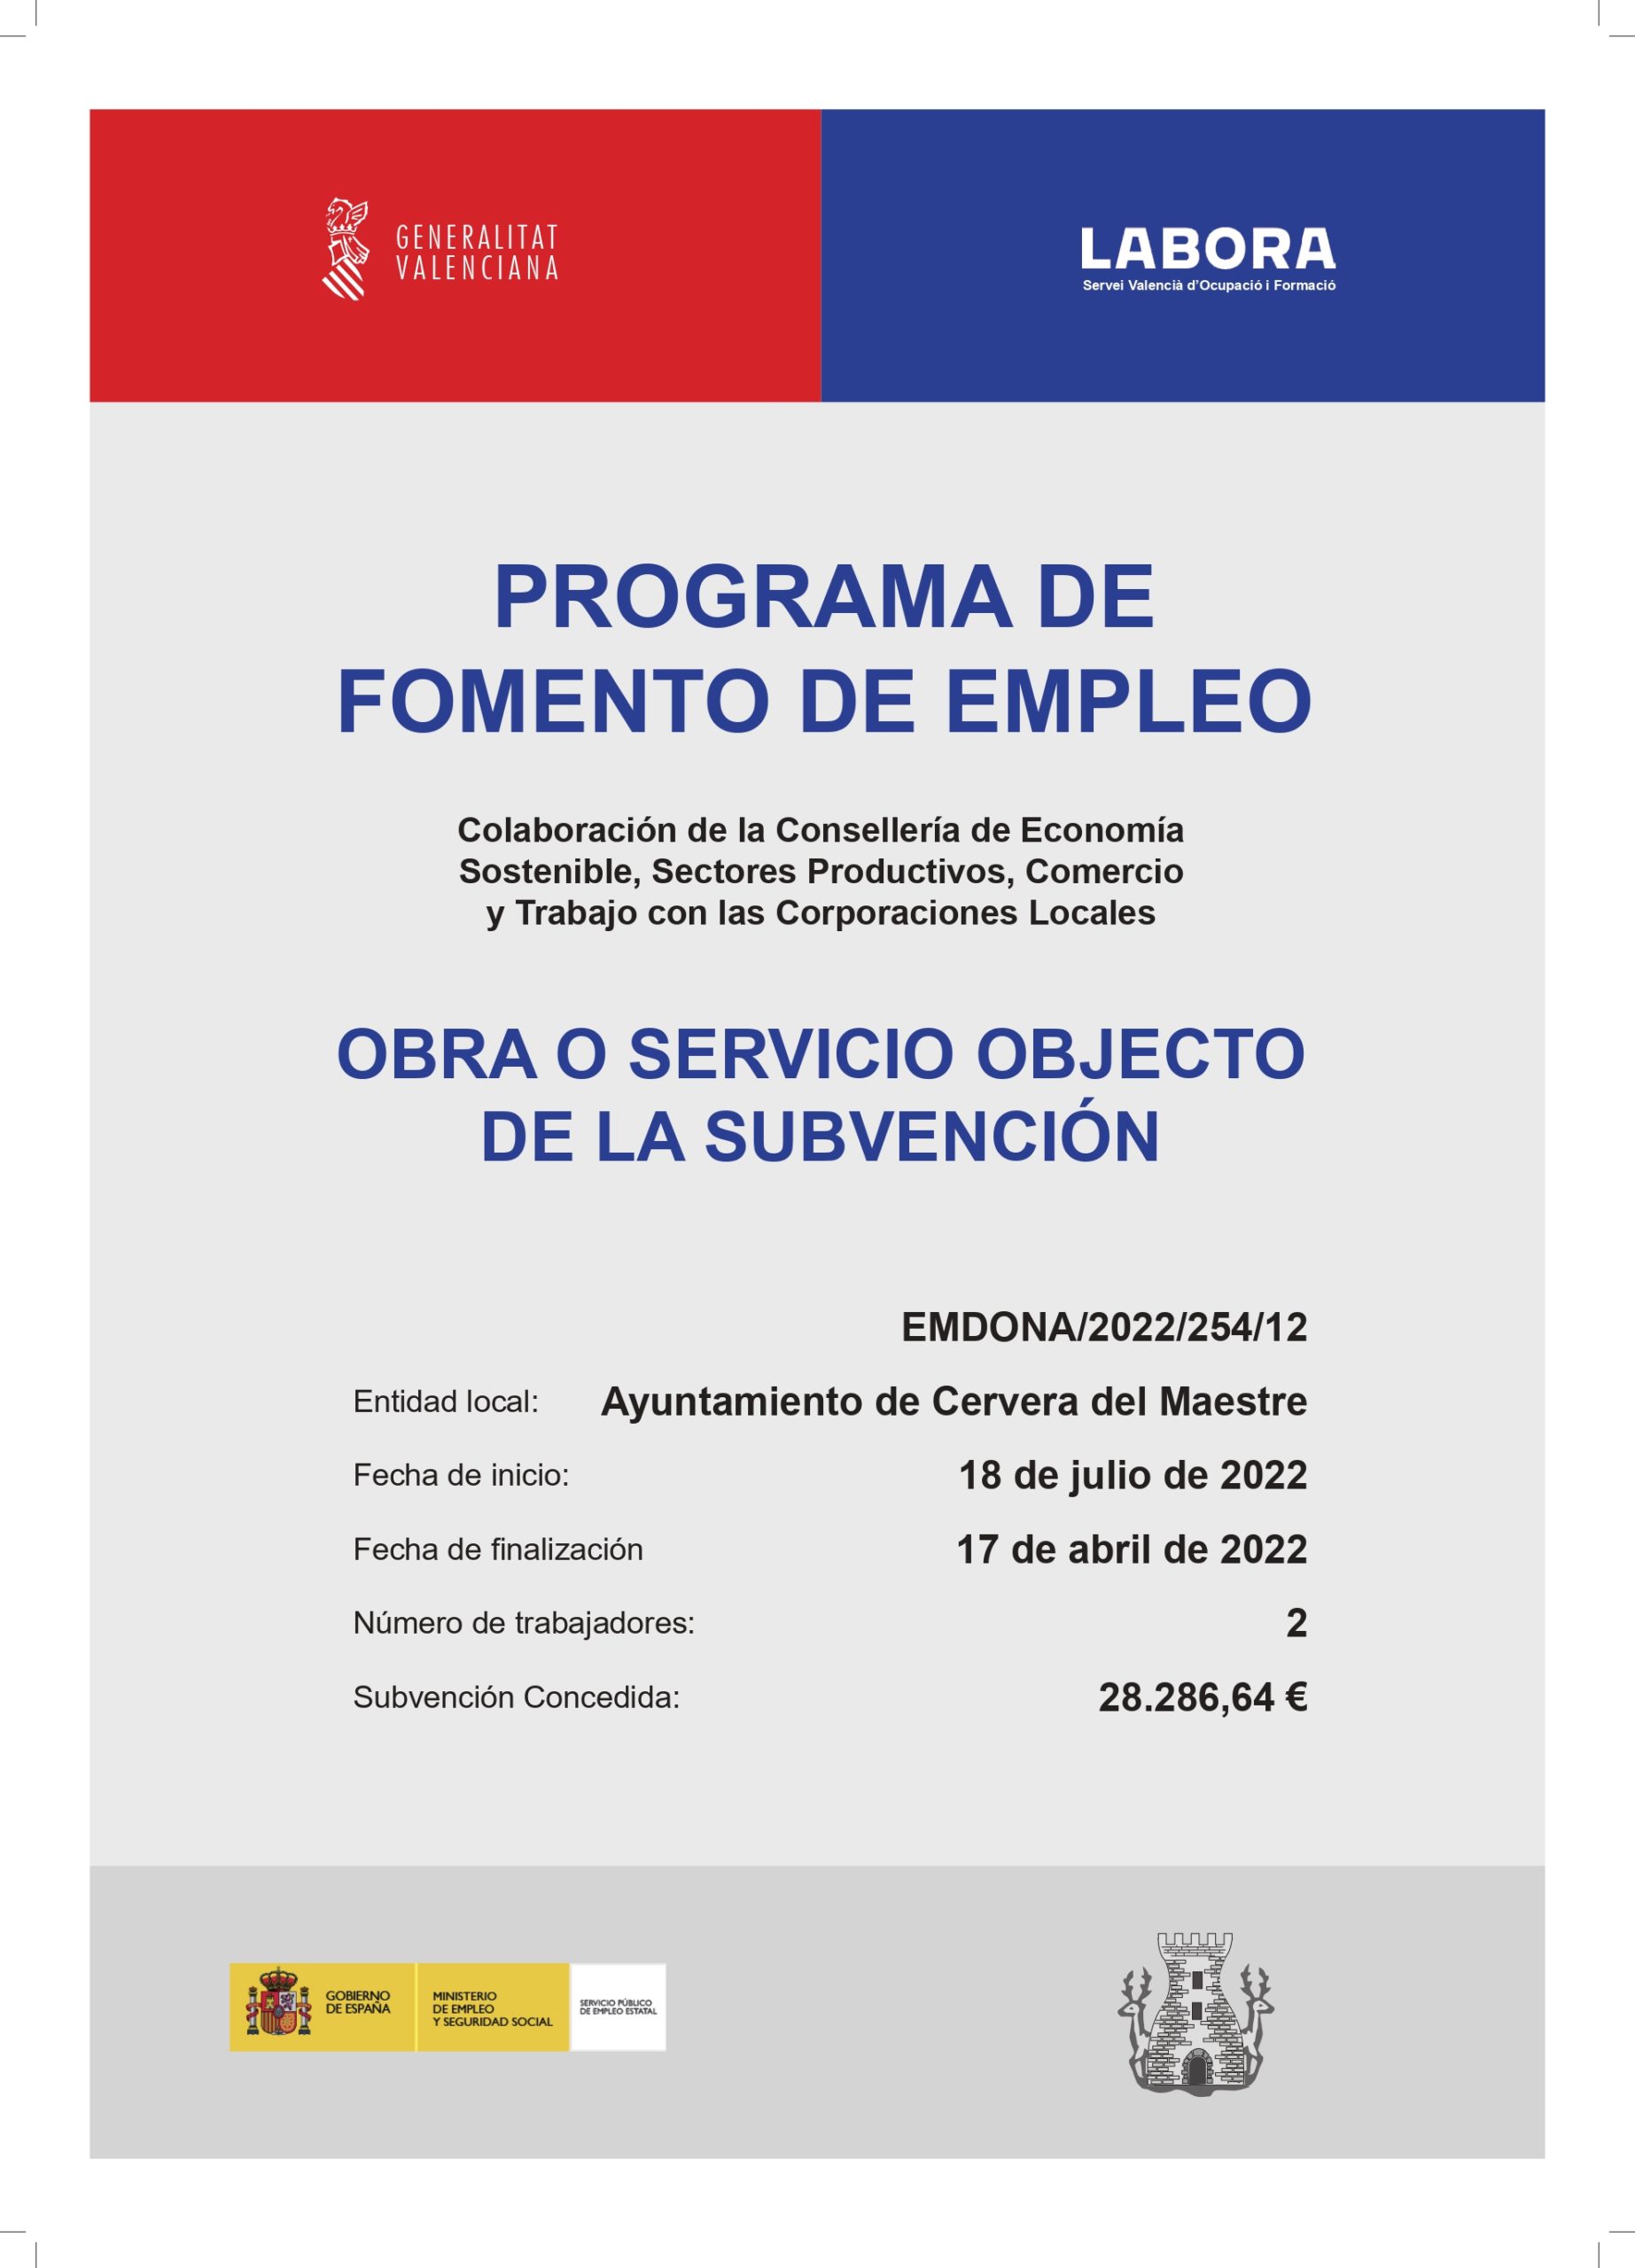 cartell fomento de empleo 2022 JULIOL (1)_page-0001